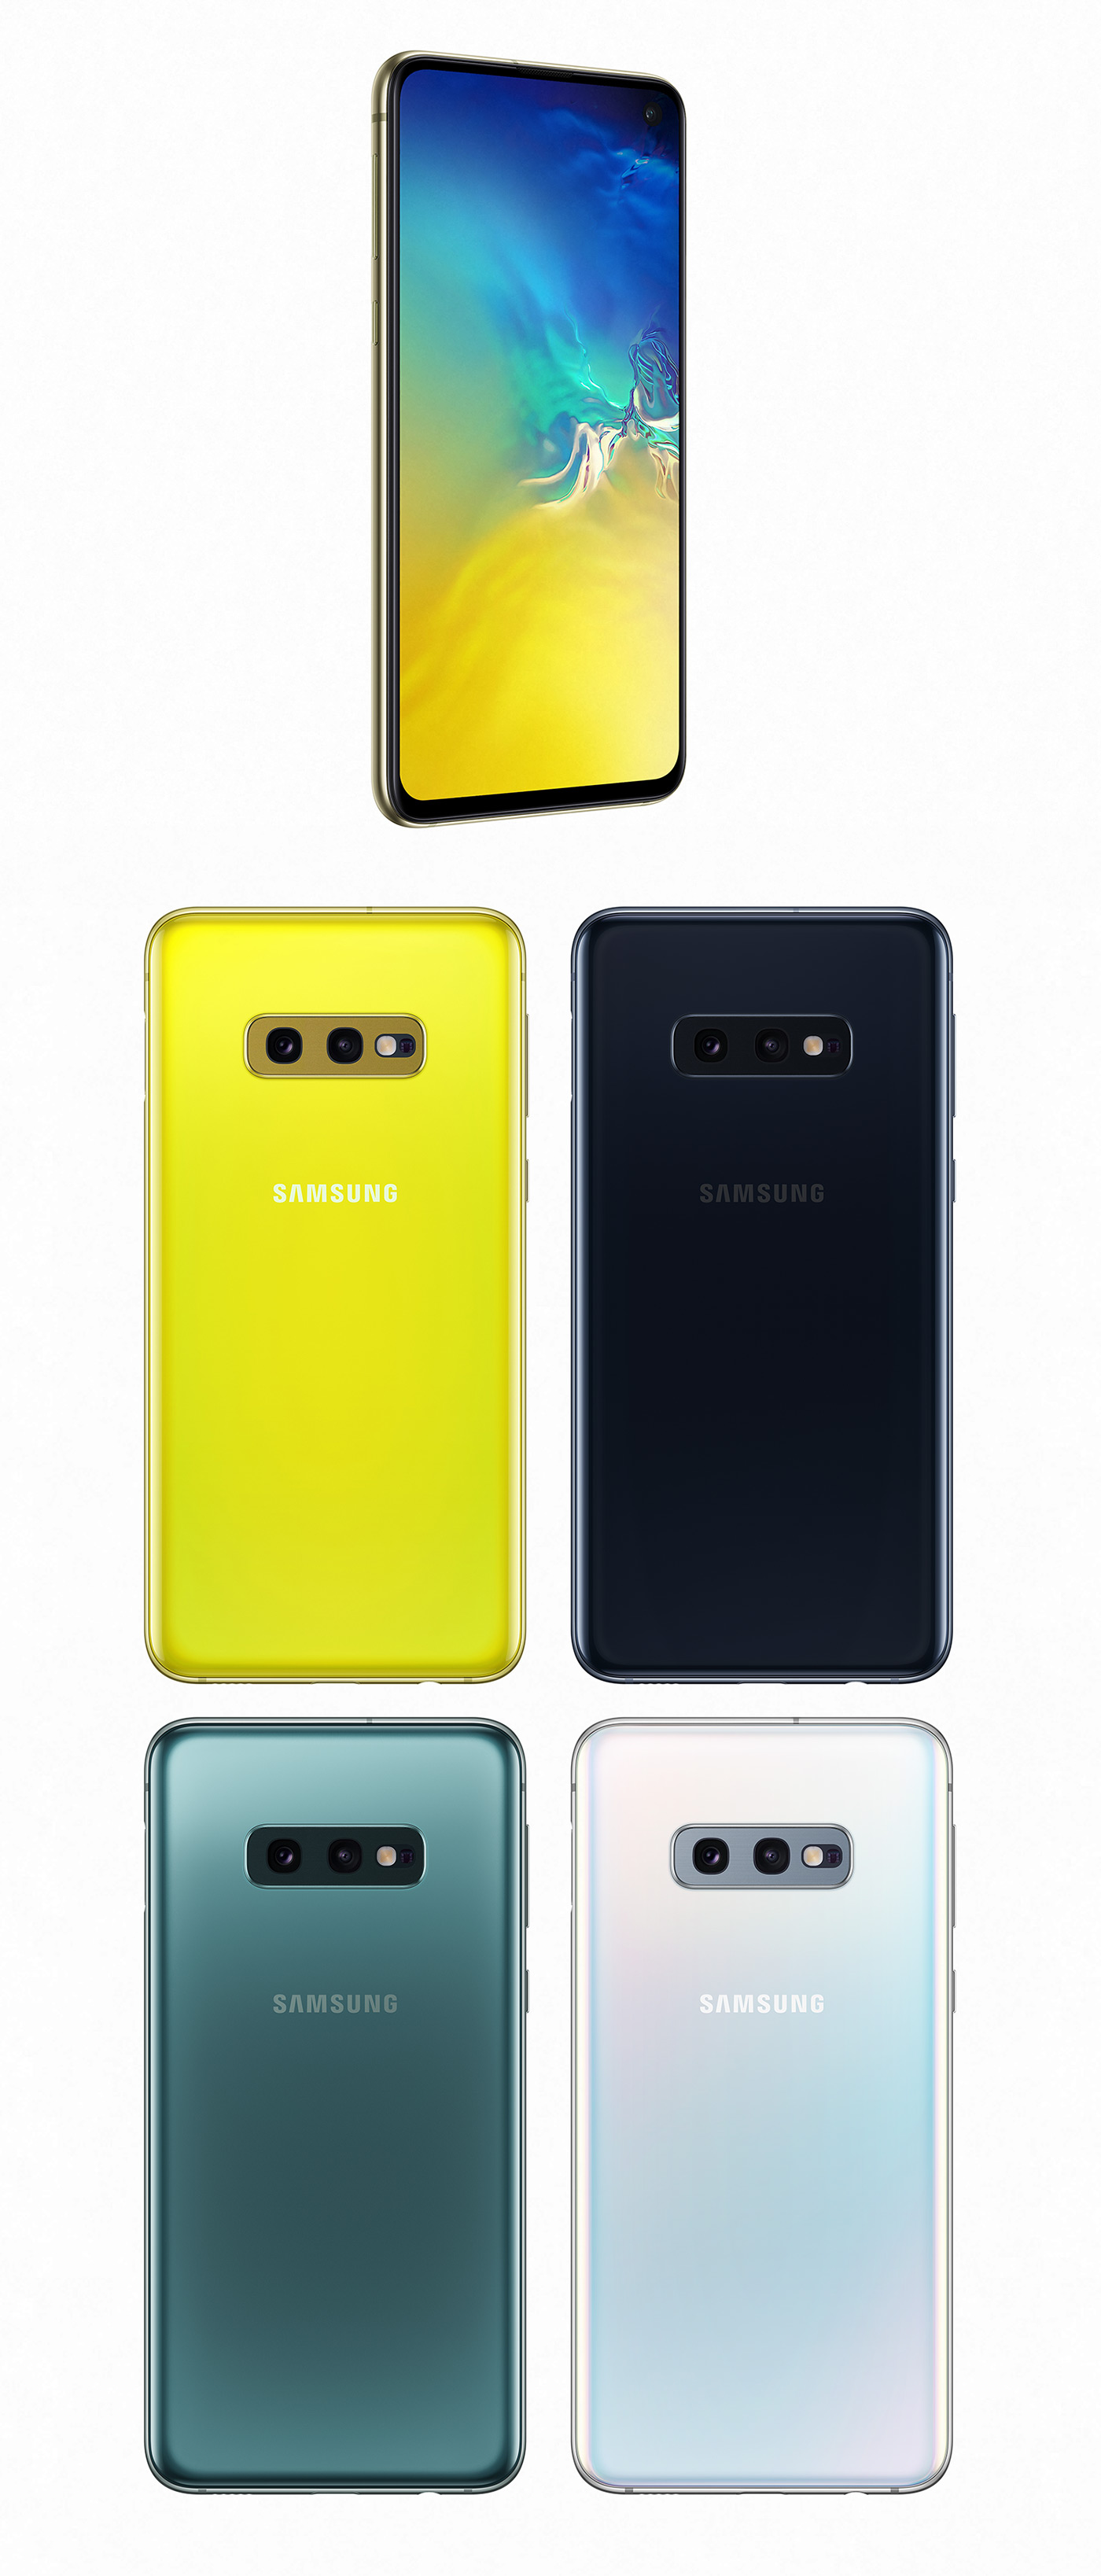 Samsung Galaxy S10/S10+ (SM-G970F /G975F)